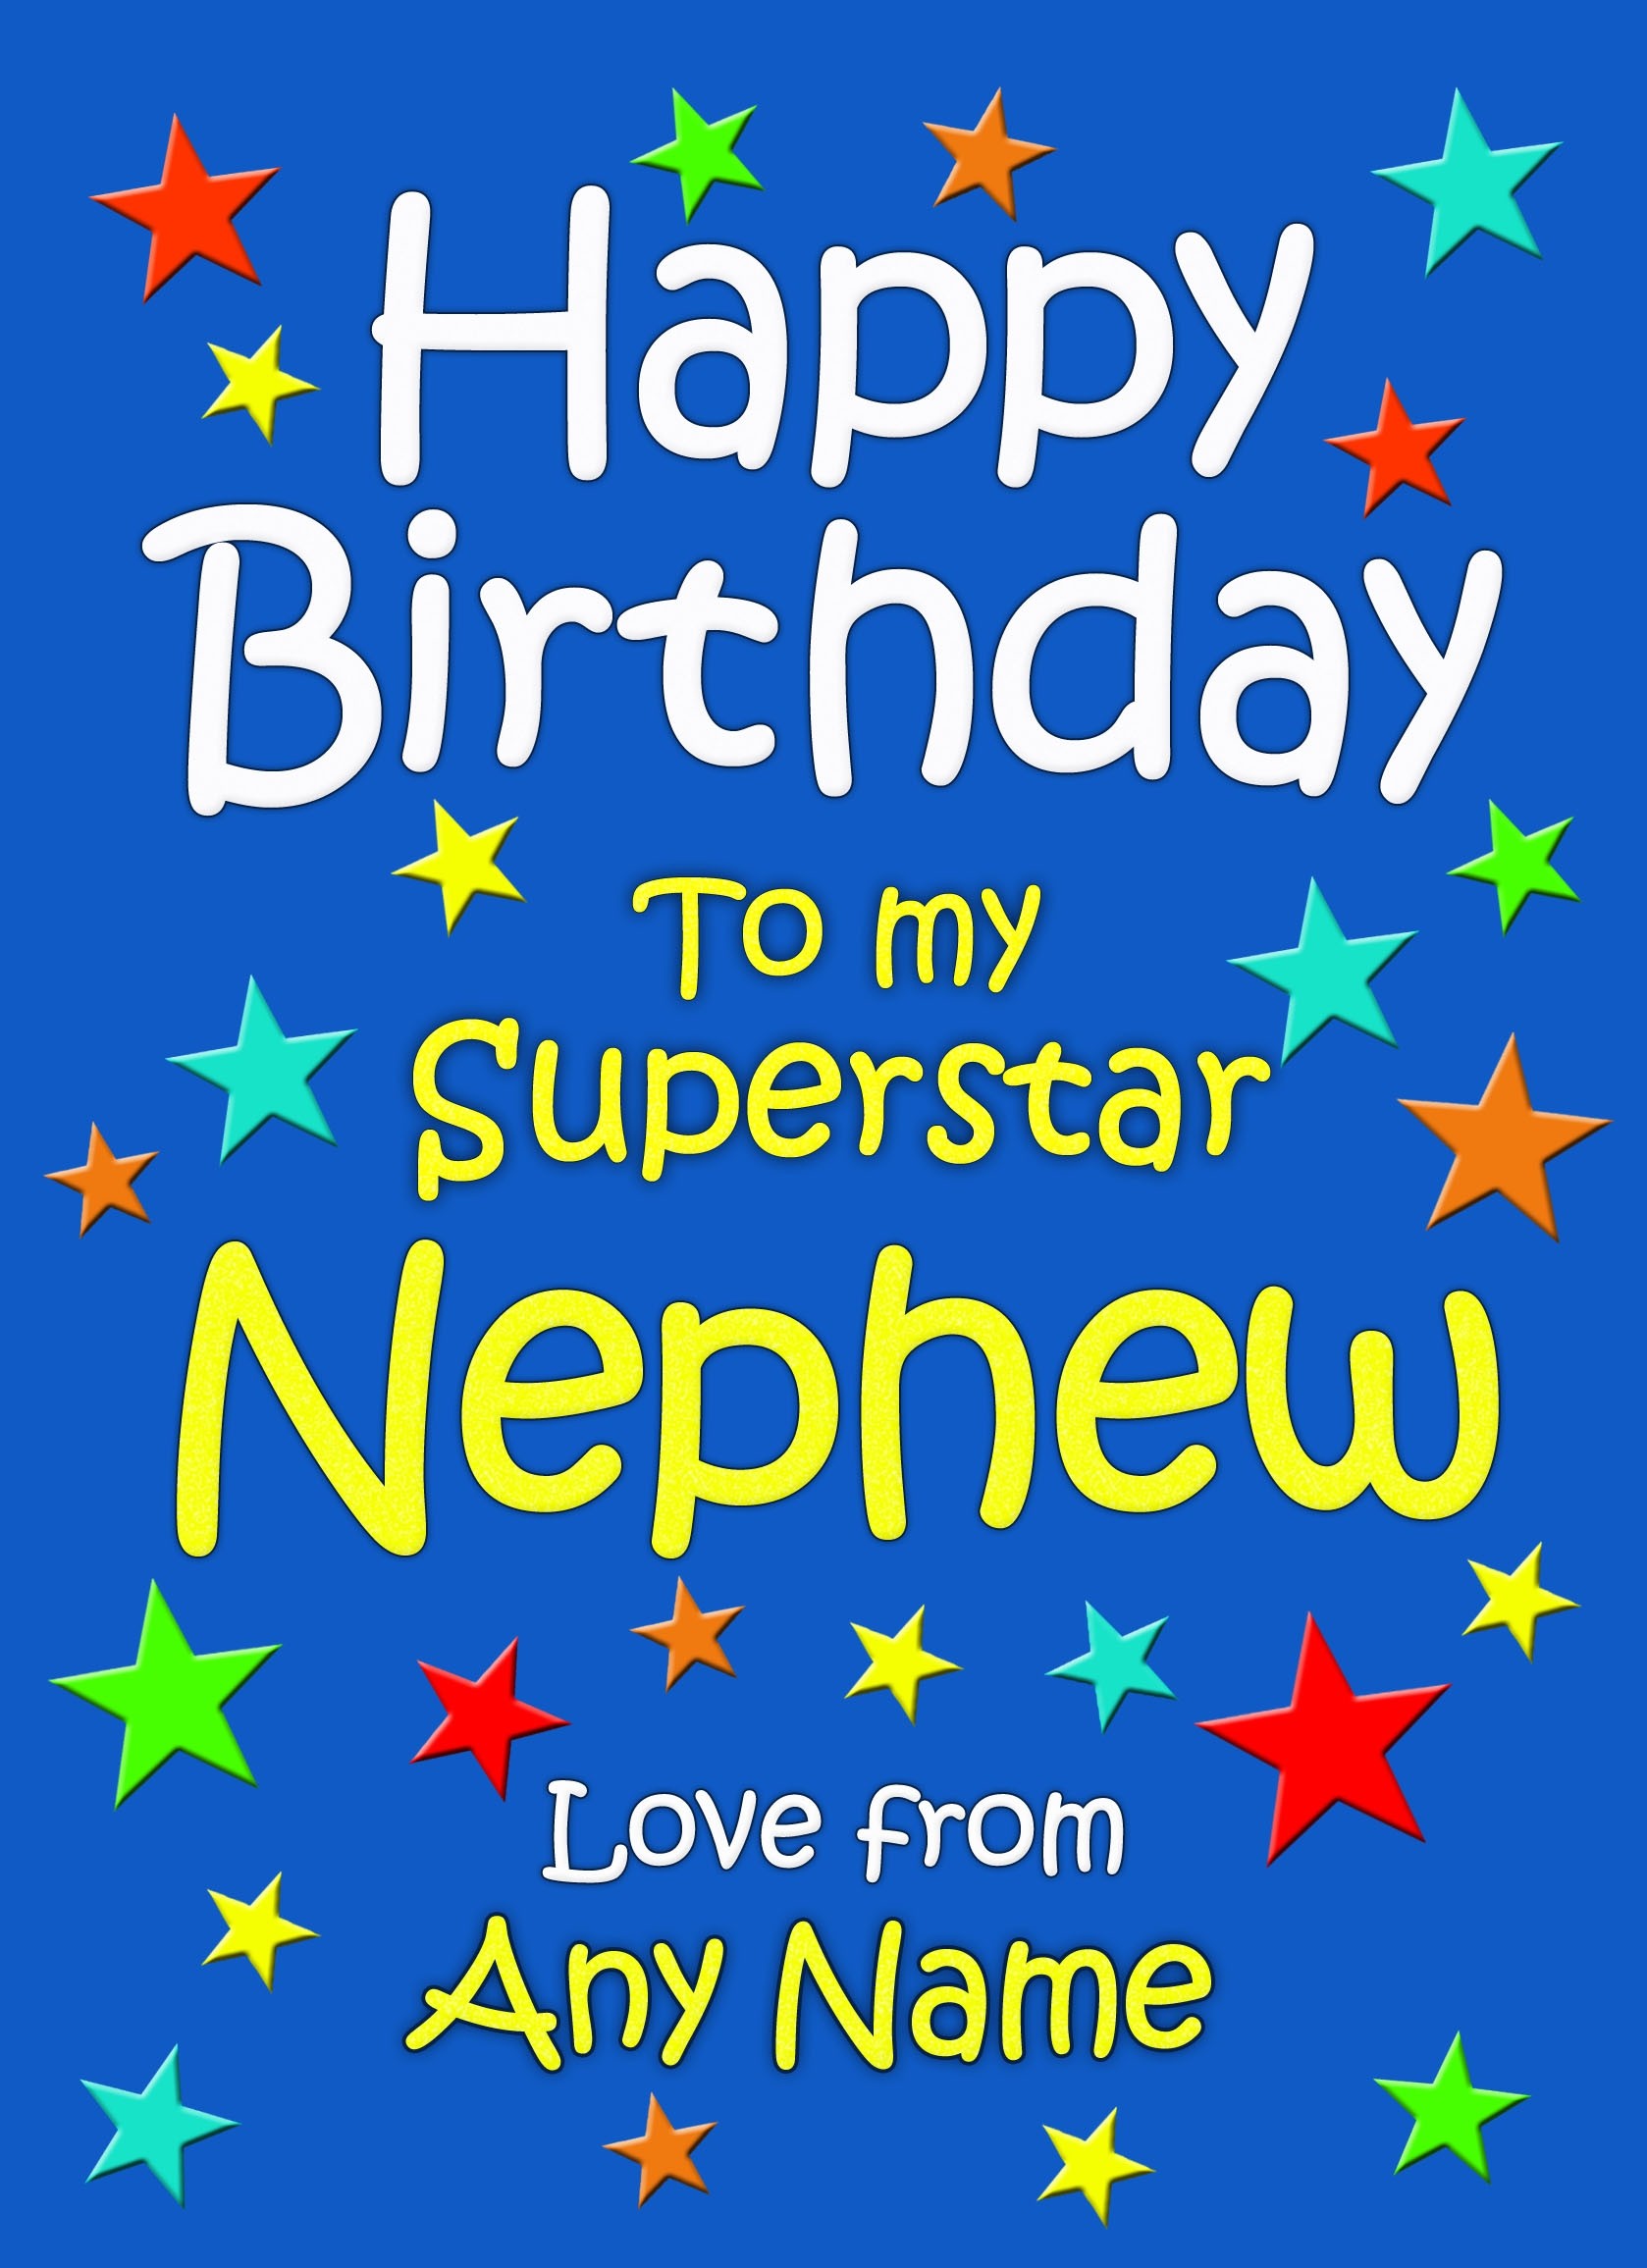 Personalised Nephew Birthday Card (Blue)